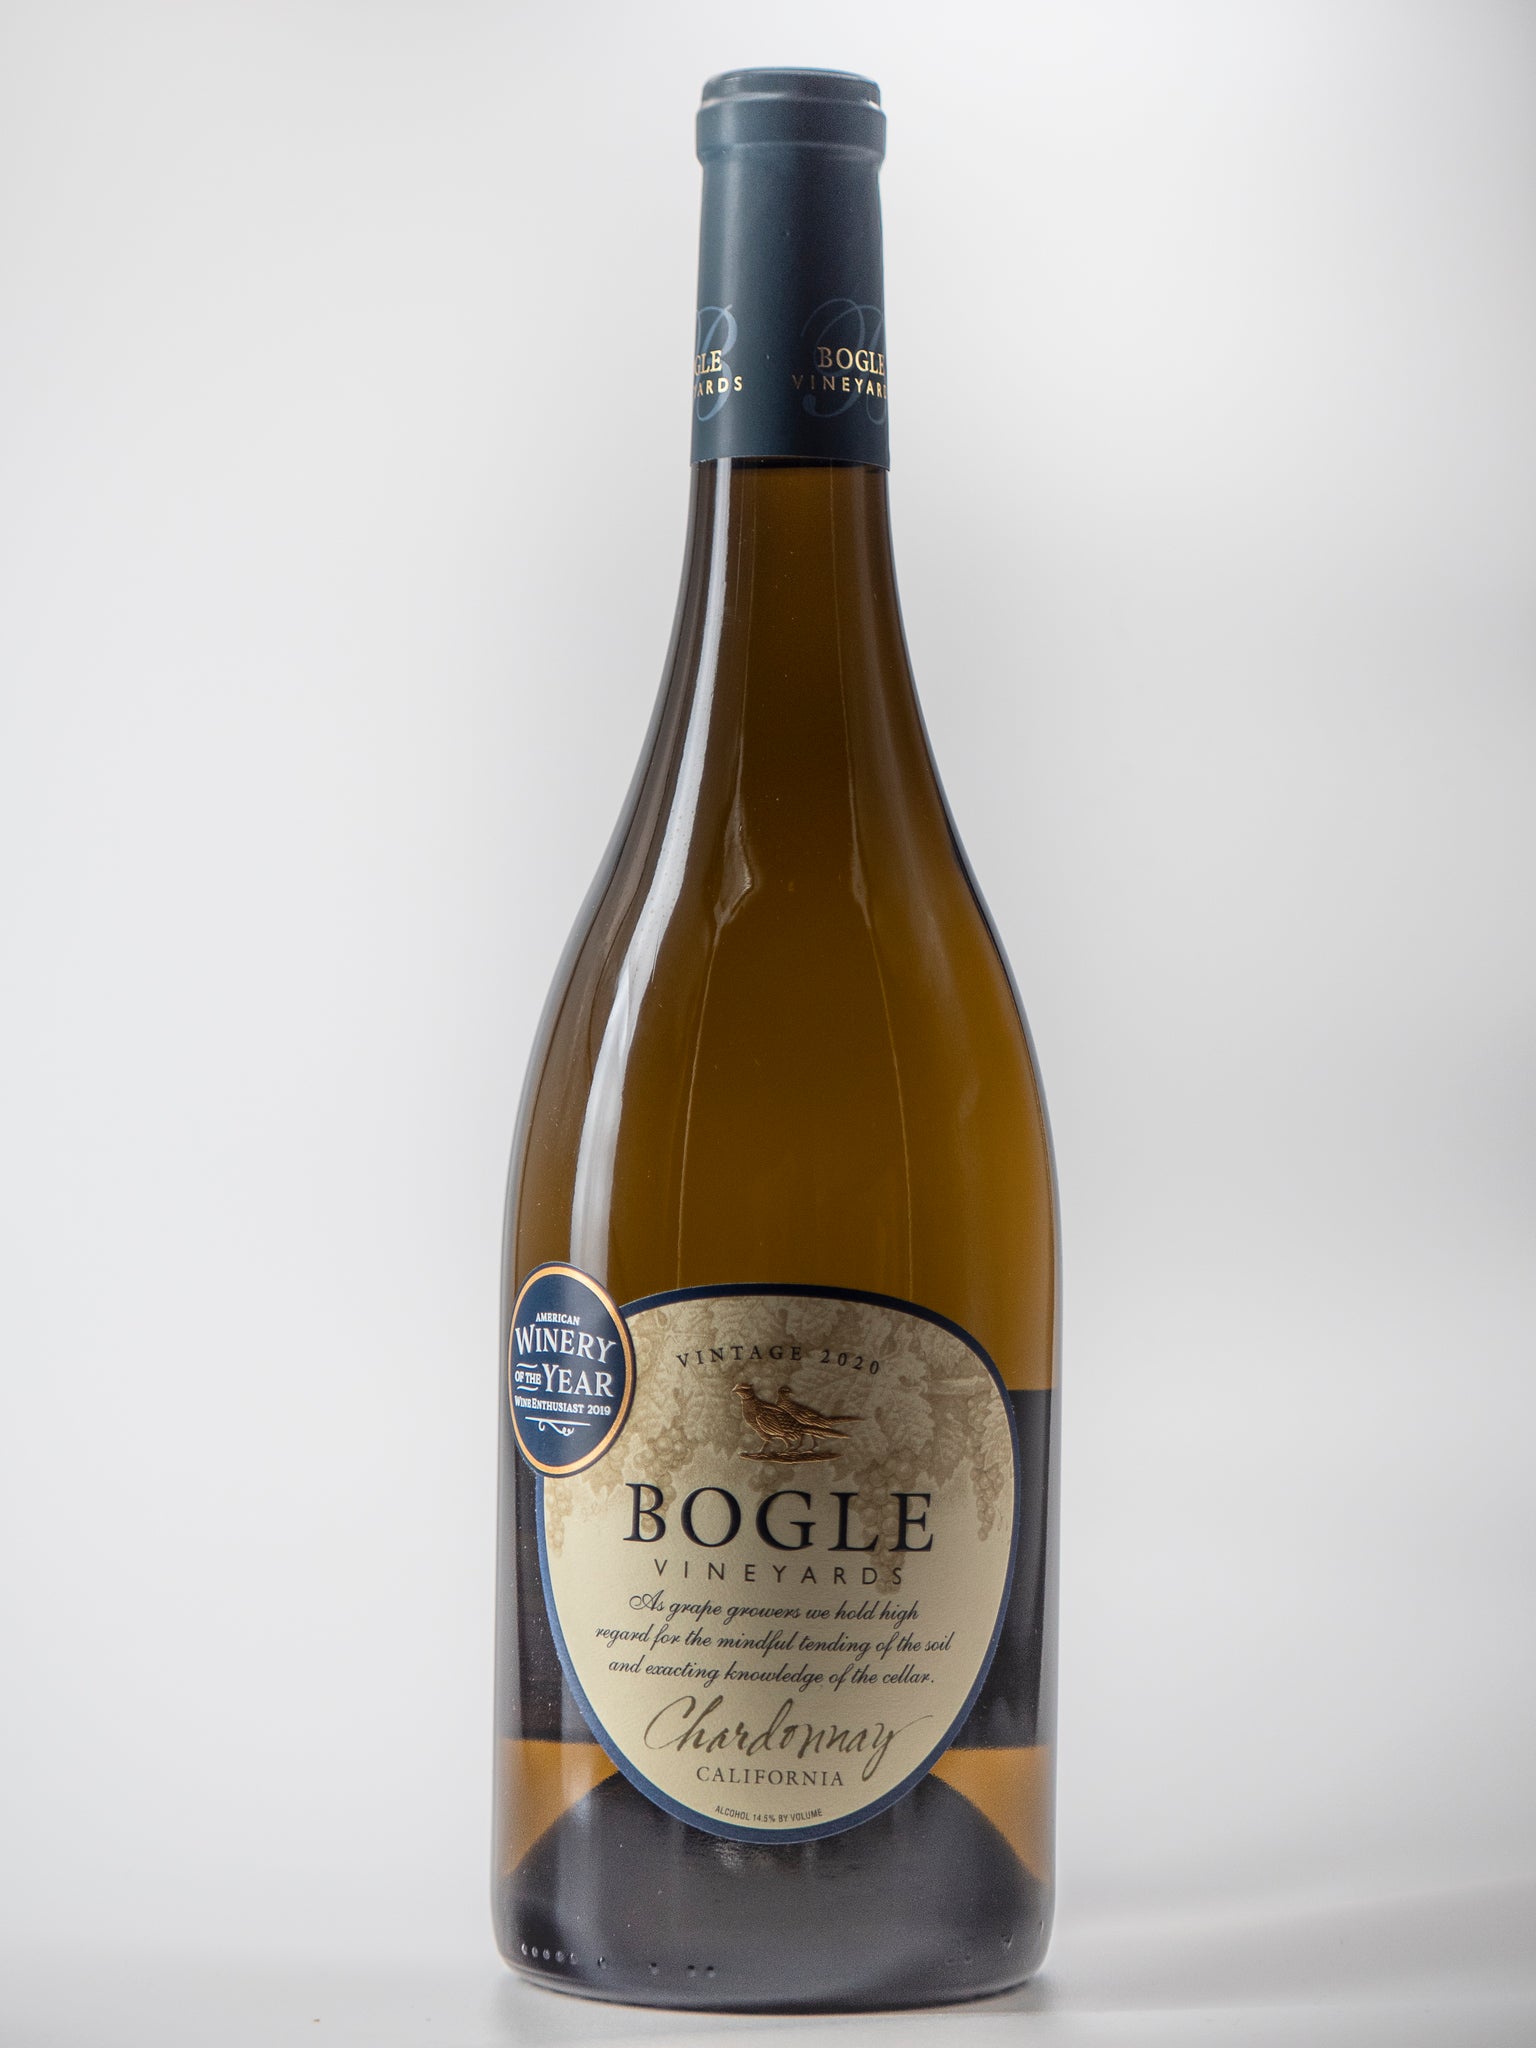 Chardonnay, Bogle